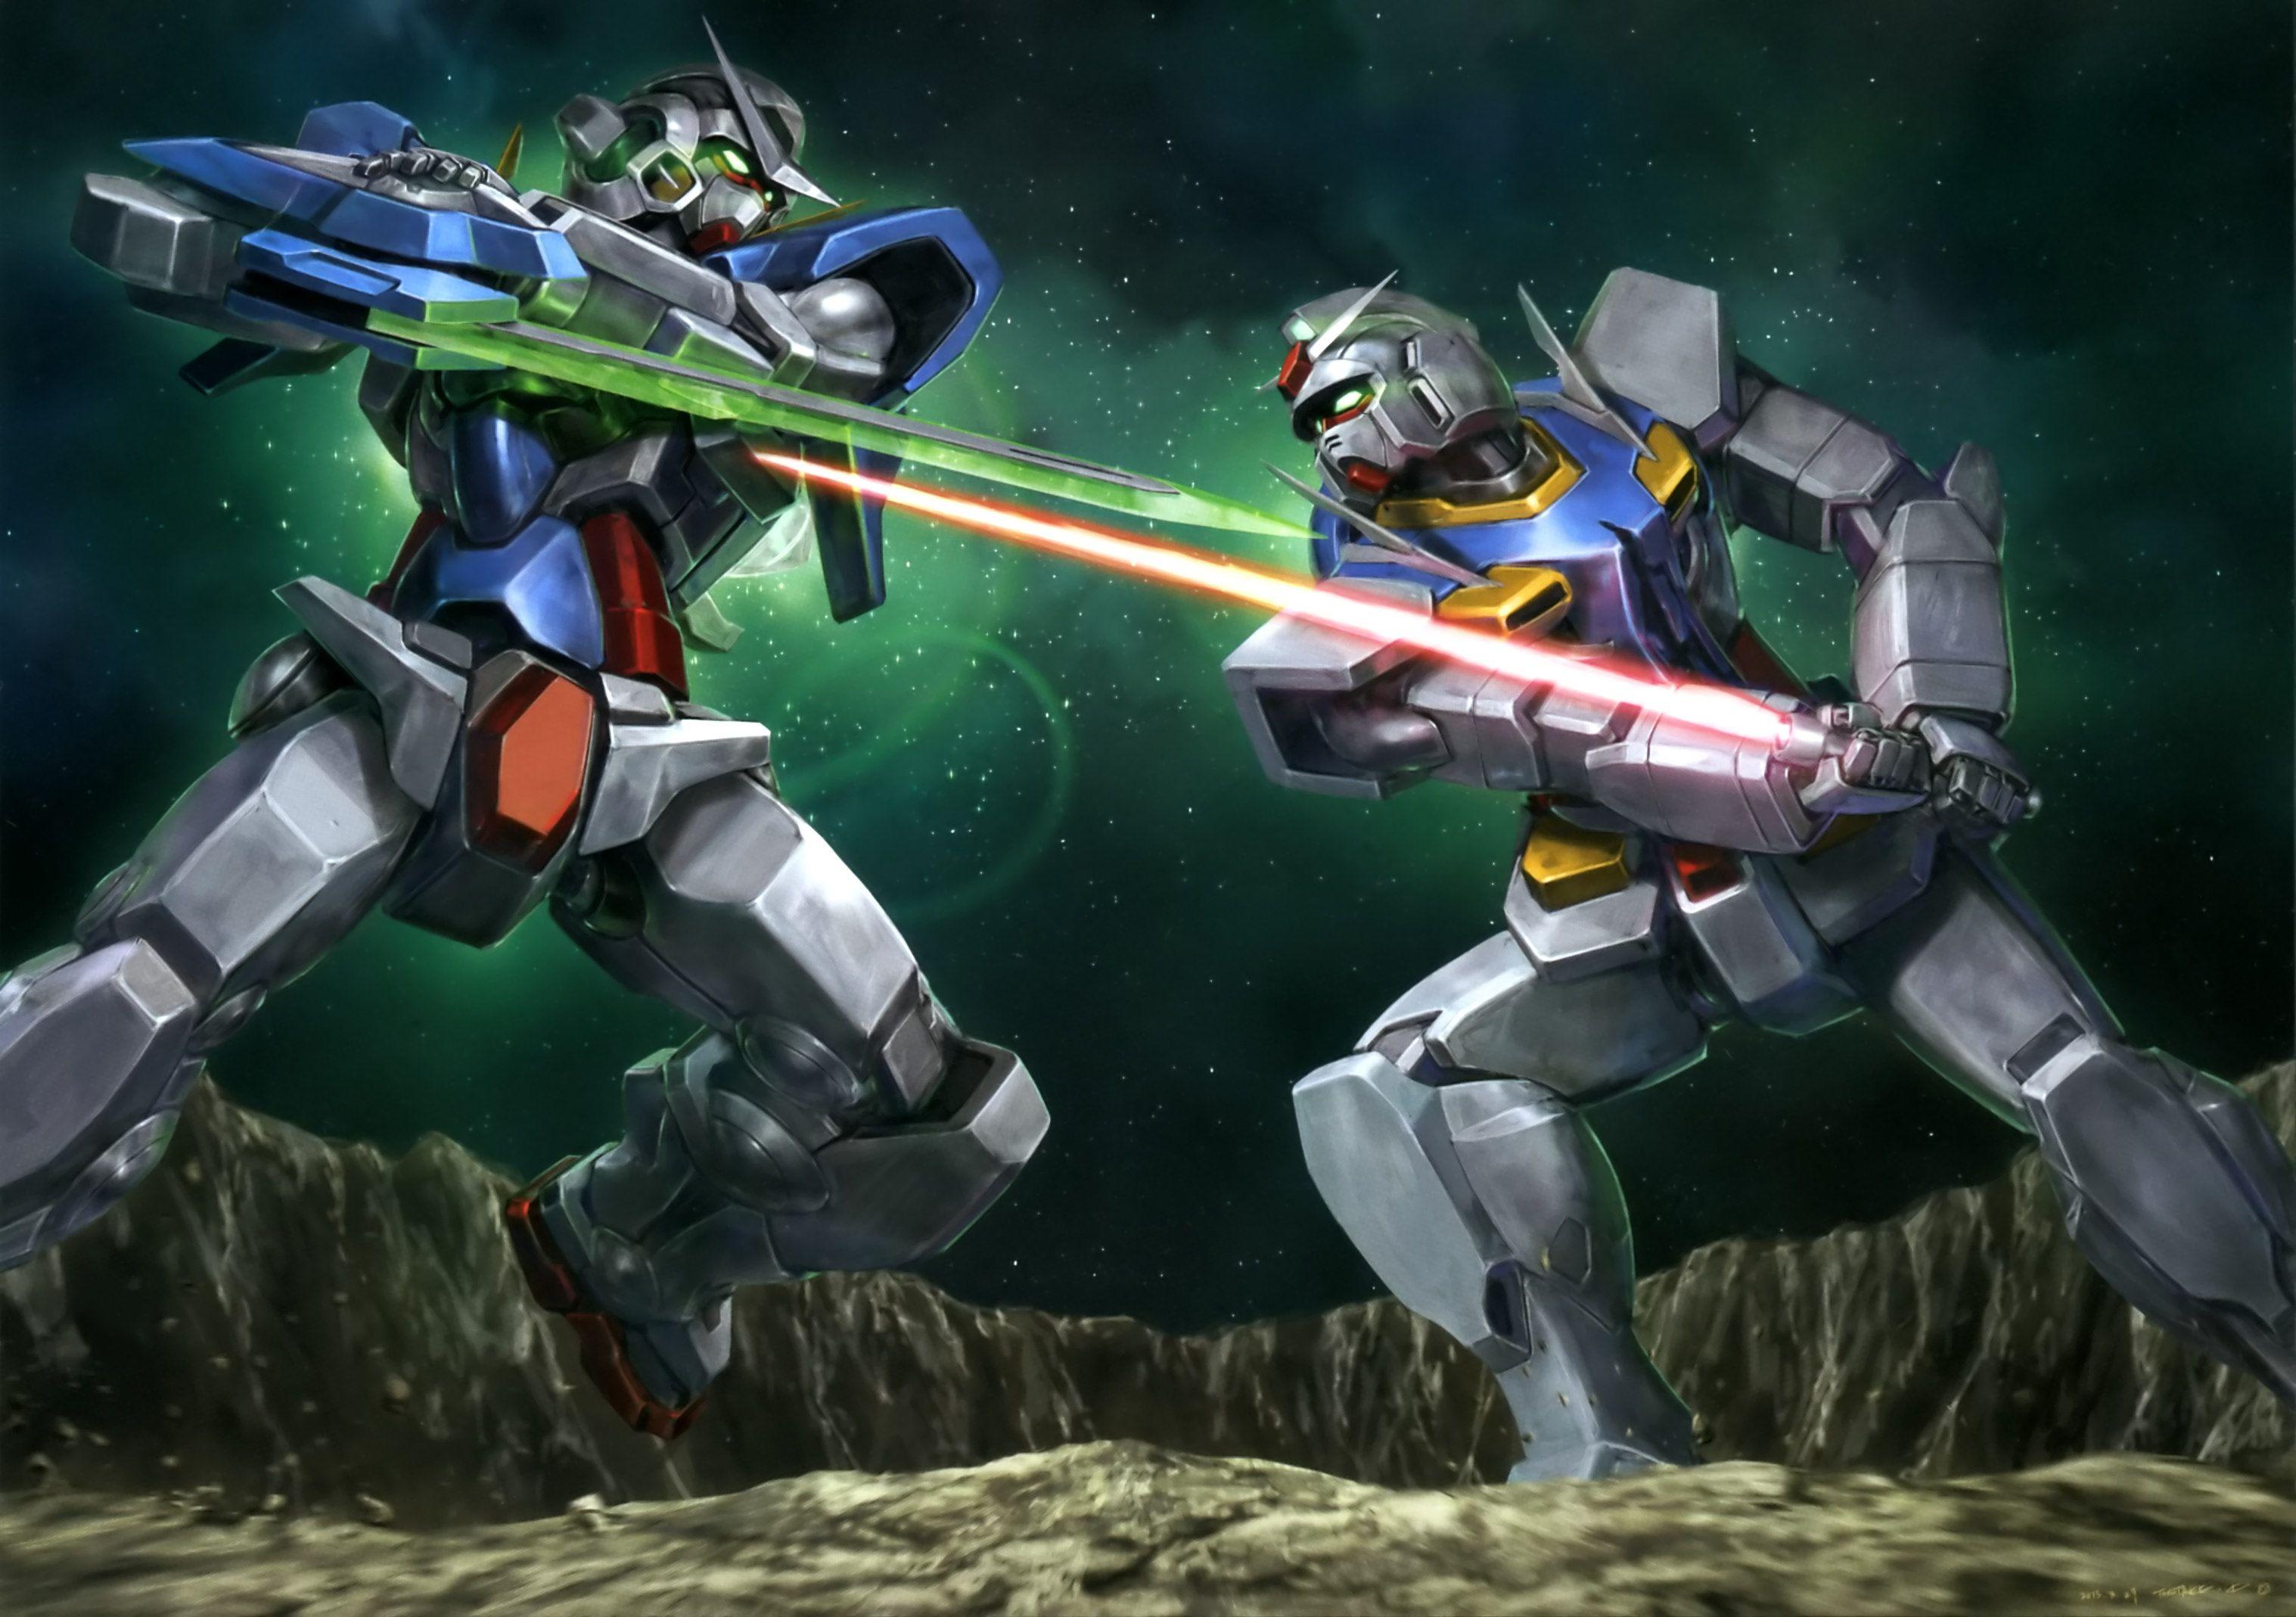 Gundam 00 Raiser Wallpaper by davislim on DeviantArt